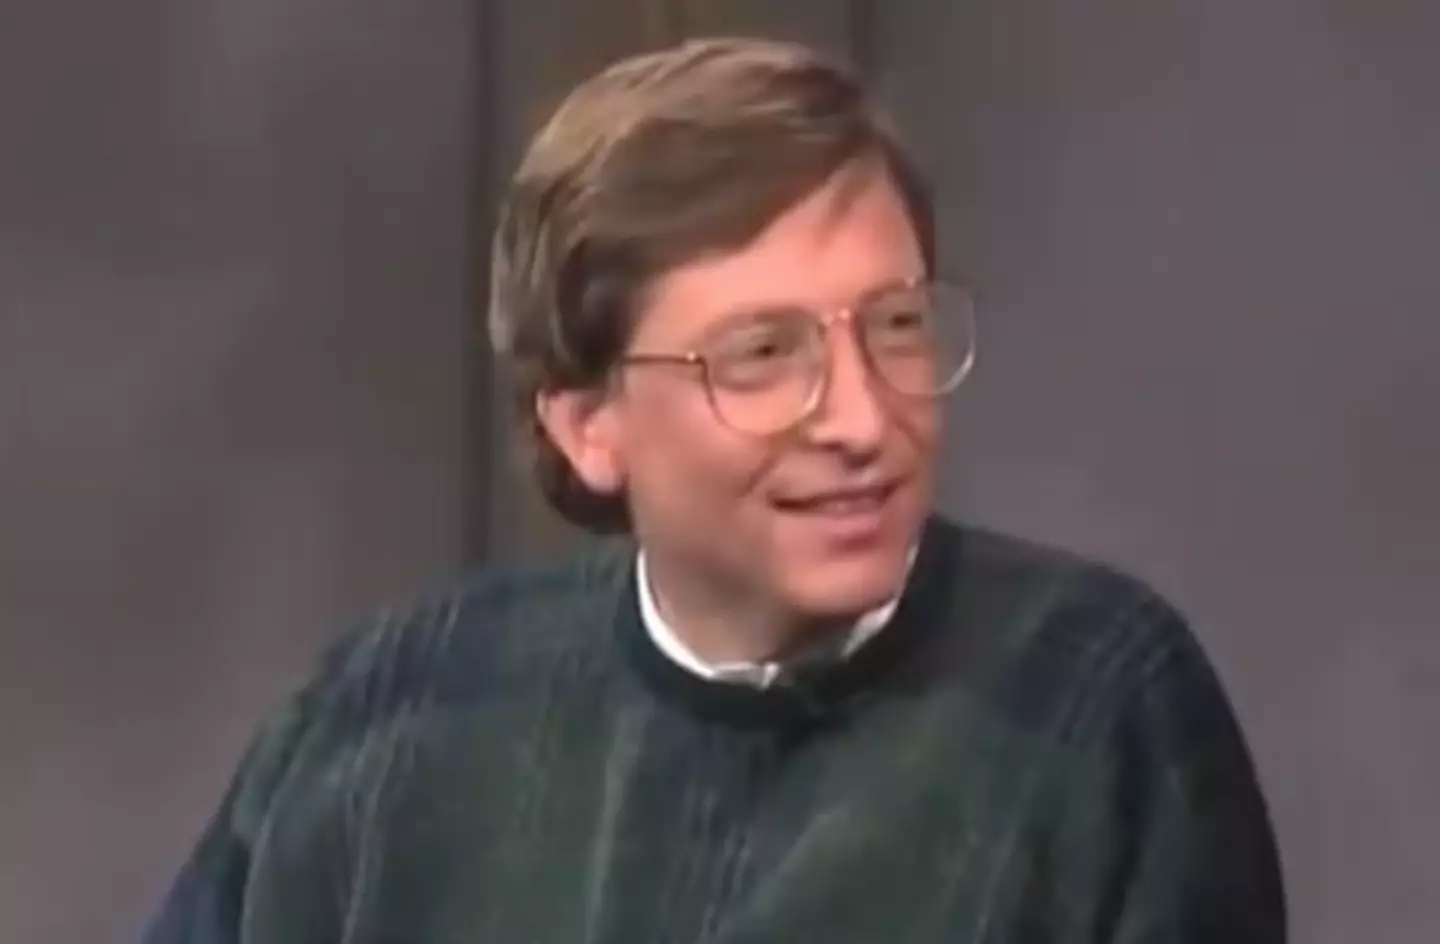 Bill Gates definitely got the last laugh.